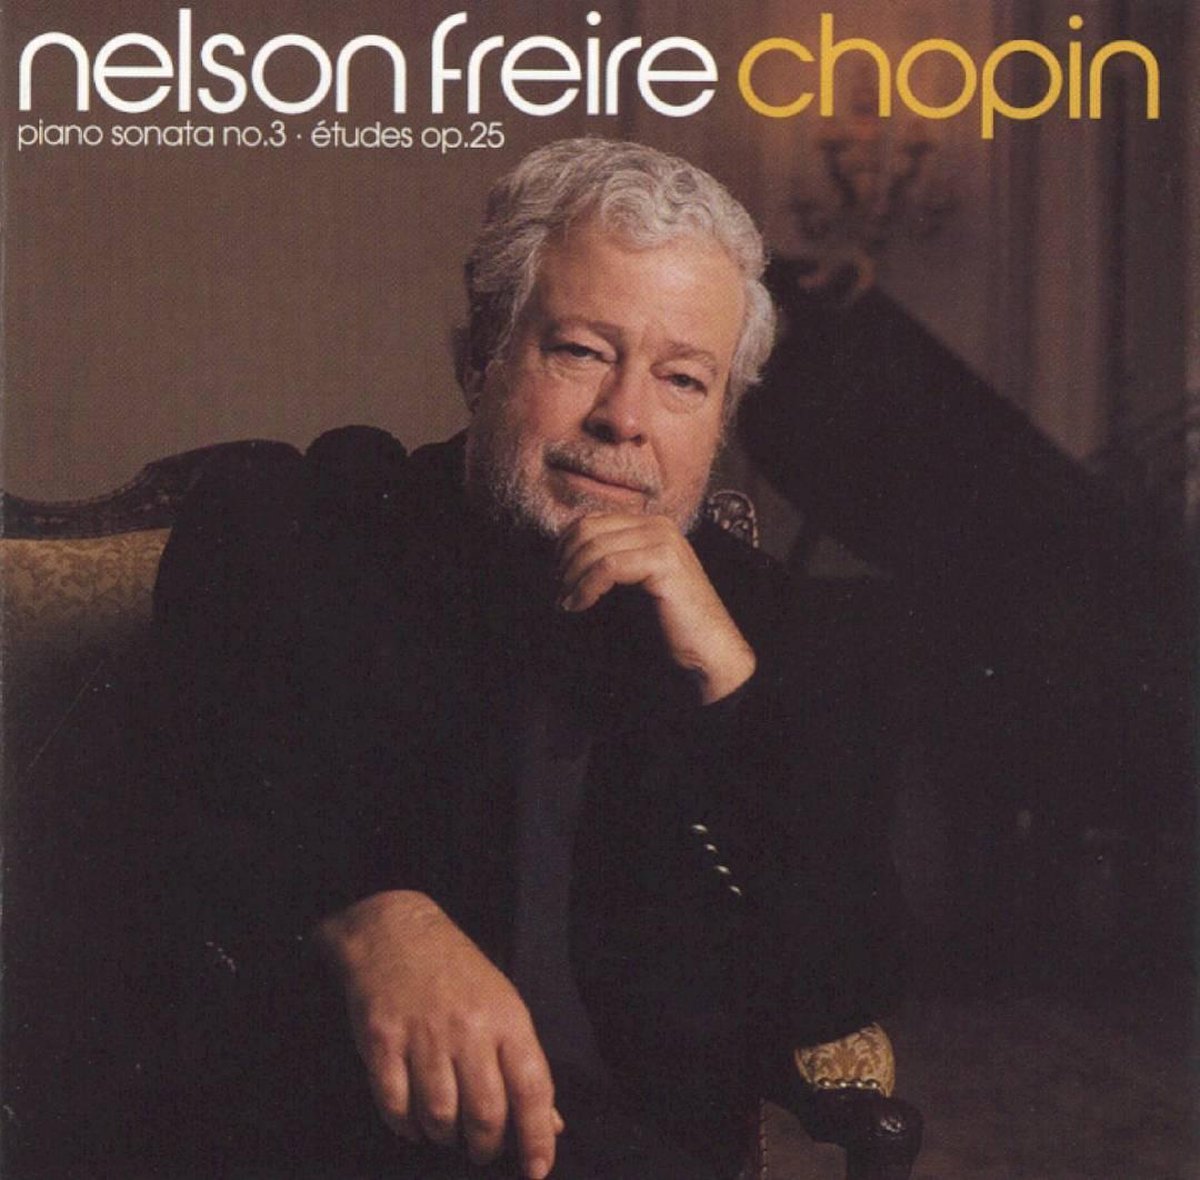 Chopin: Piano Sonata no 3, etudes Op 25, etc / Nelson Freire - Nelson Freire